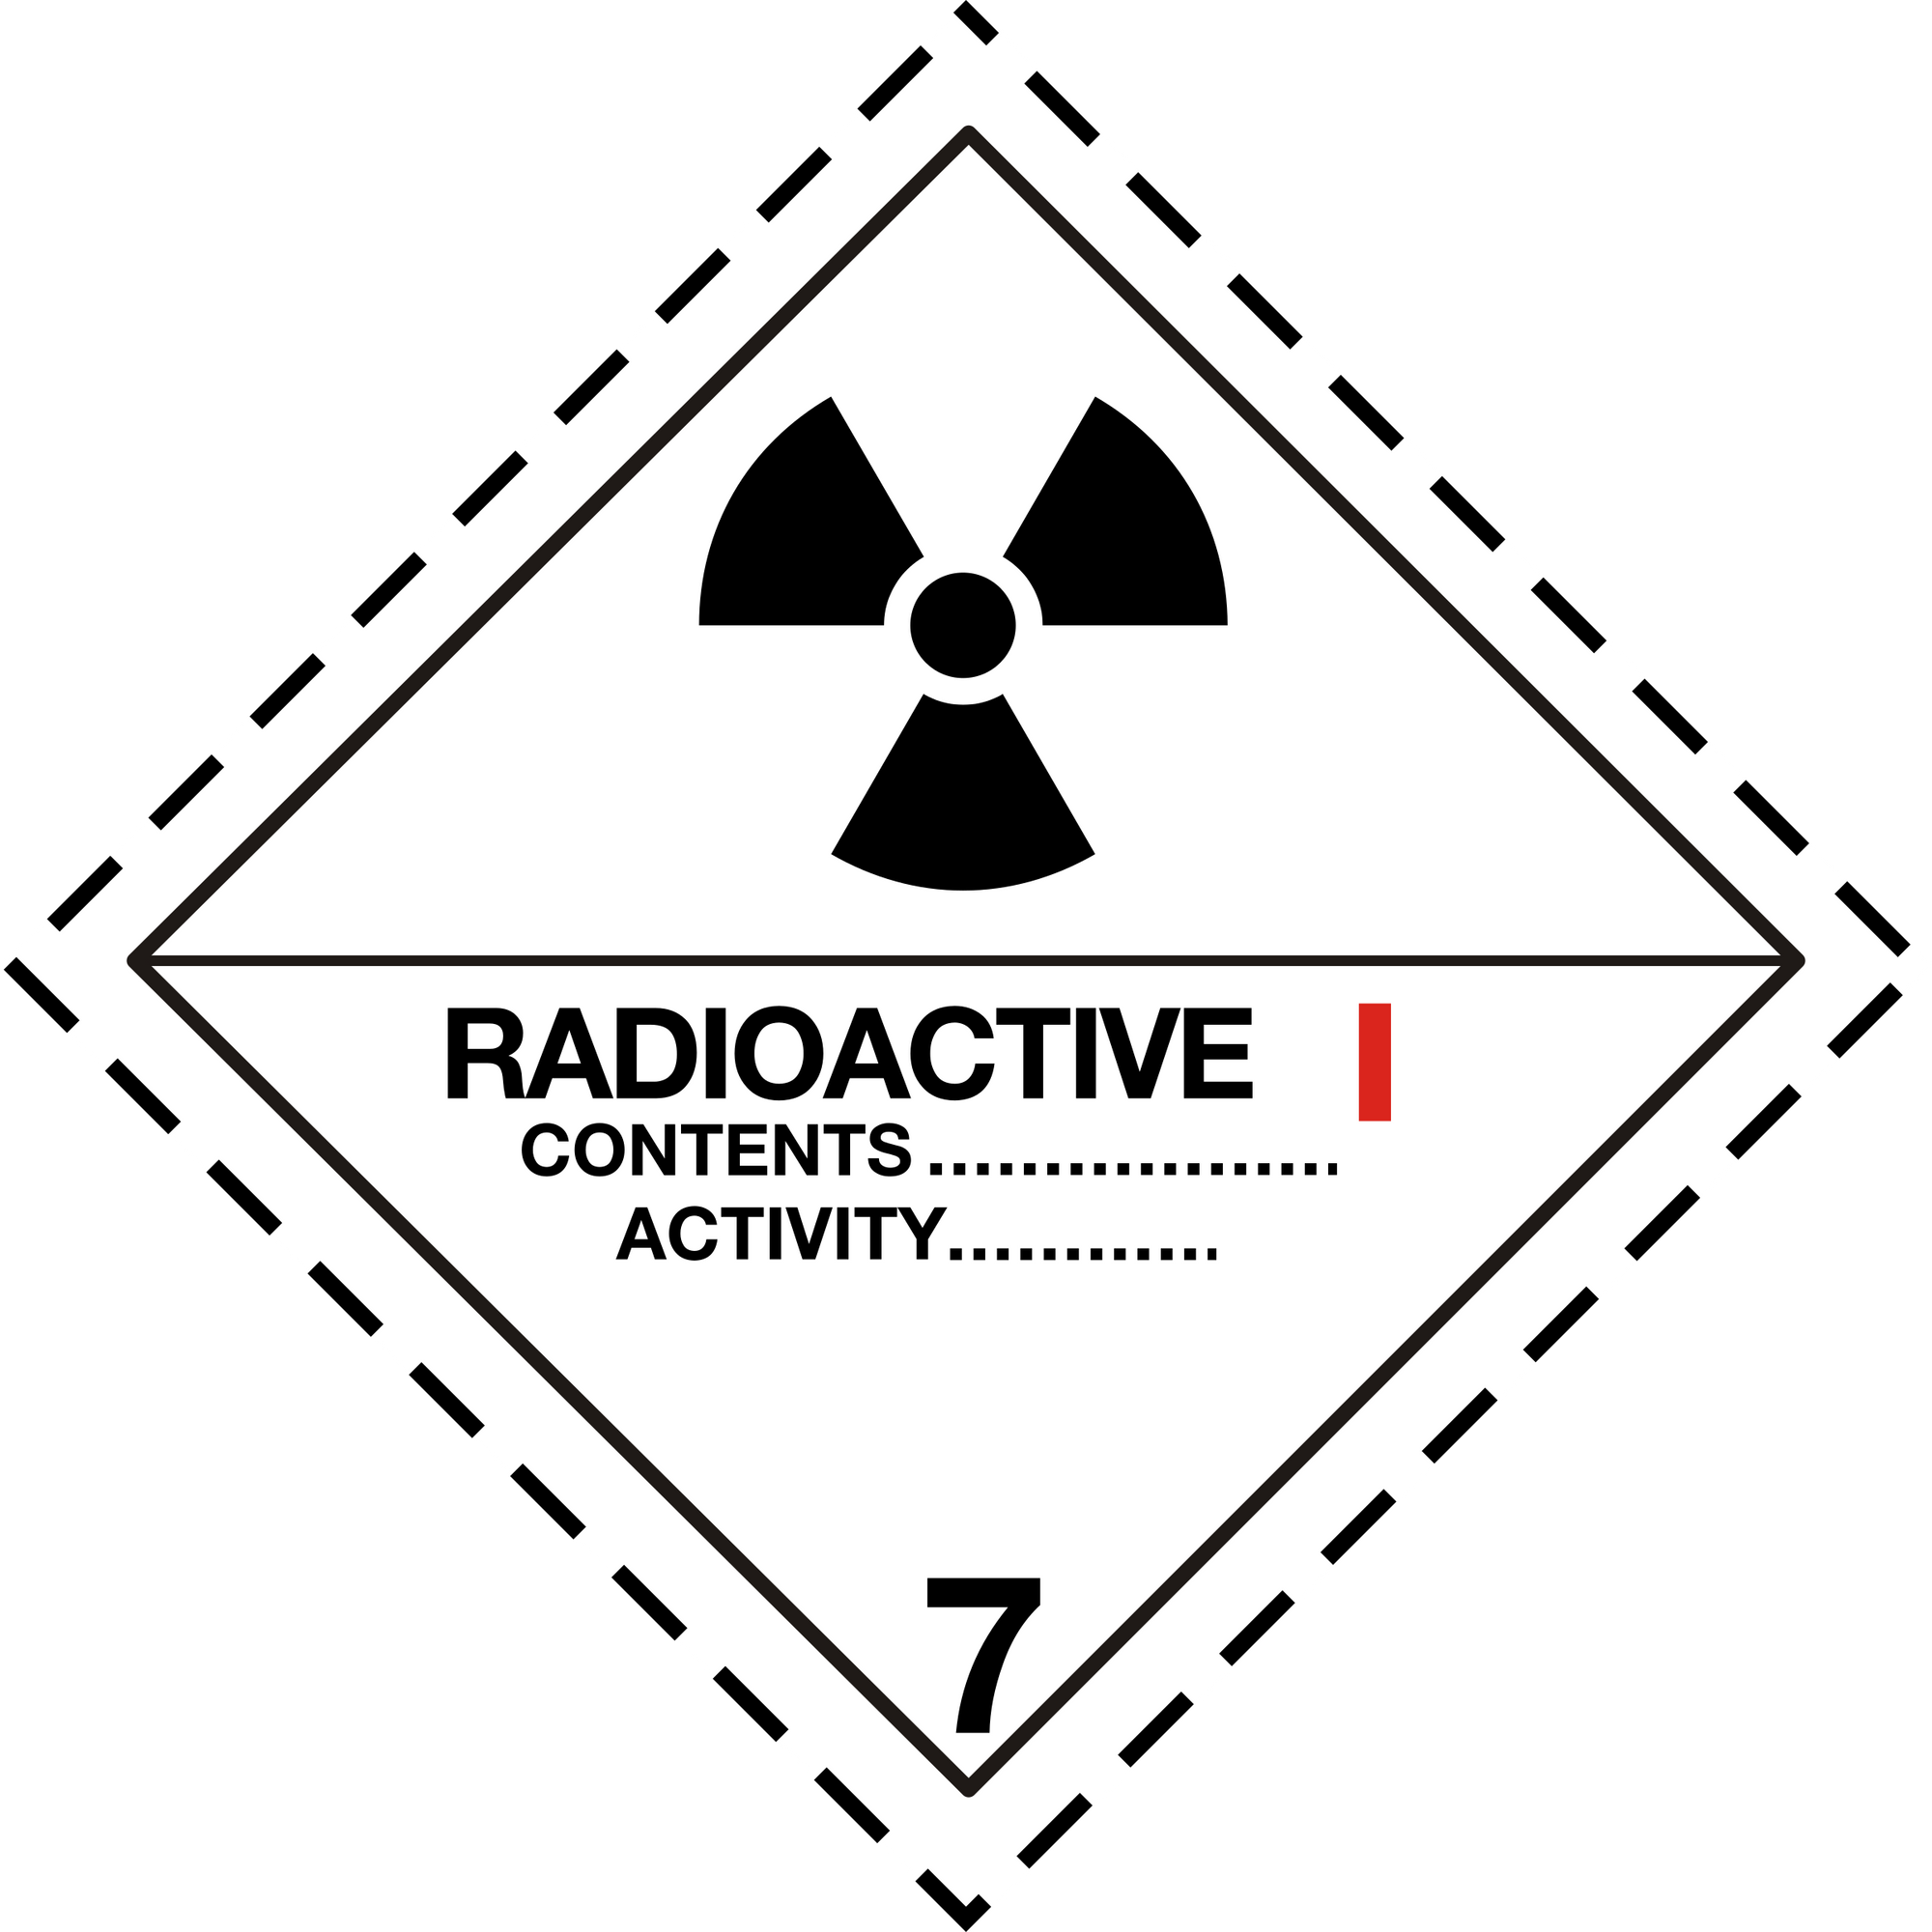 Class 7 Radioactive I HAZMAT Warning Sticker Label